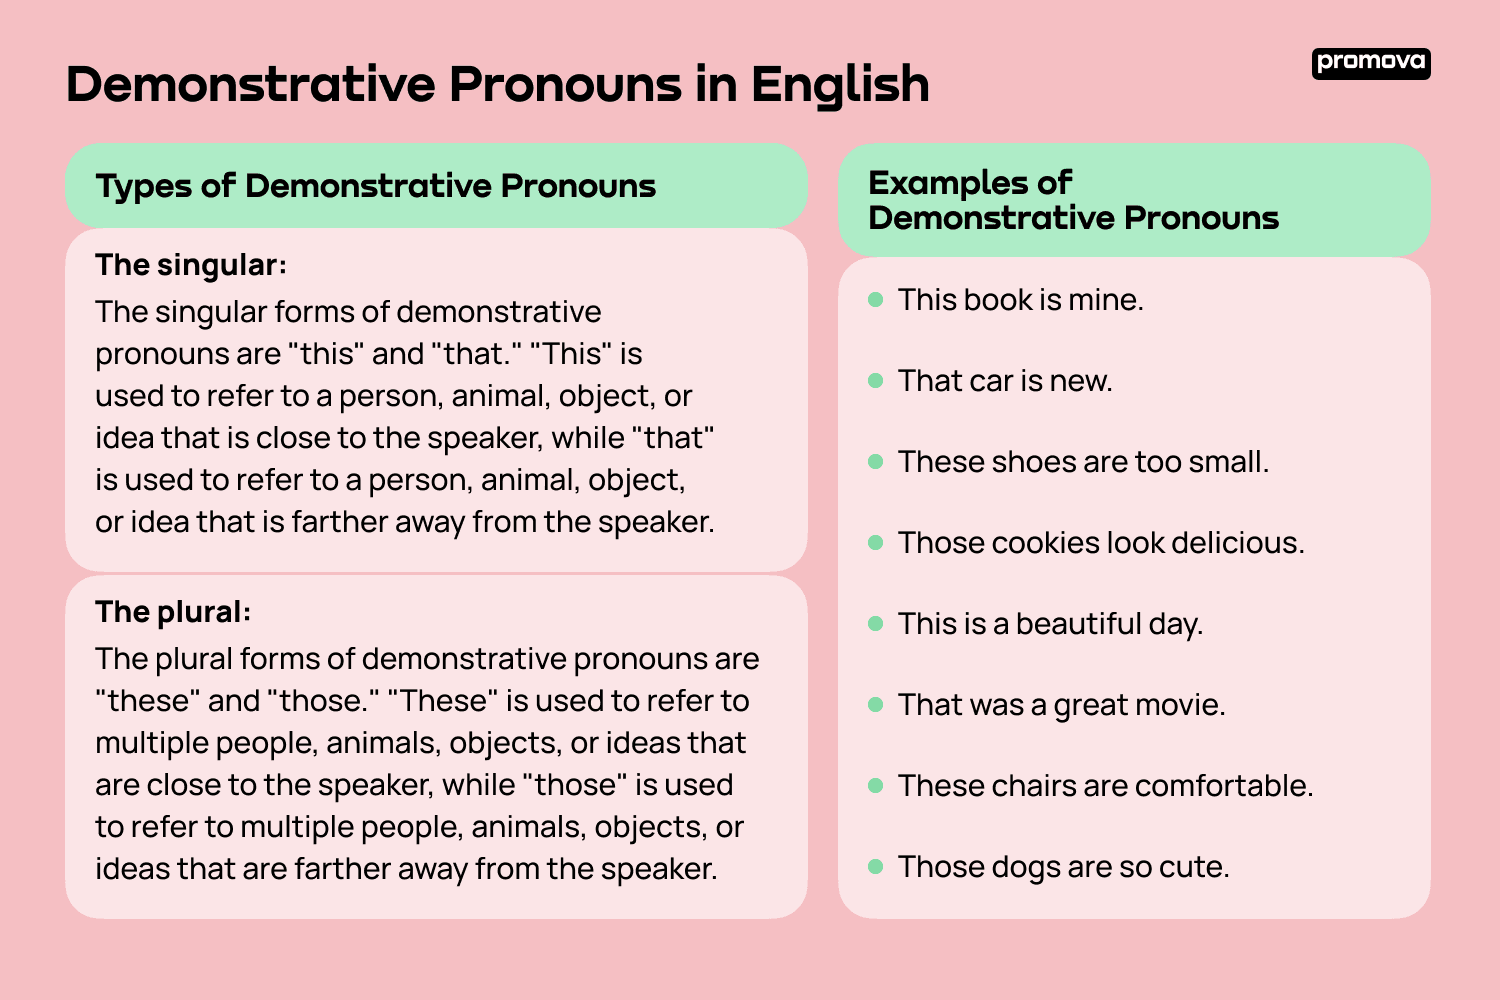 Types of Demonstrative Pronouns